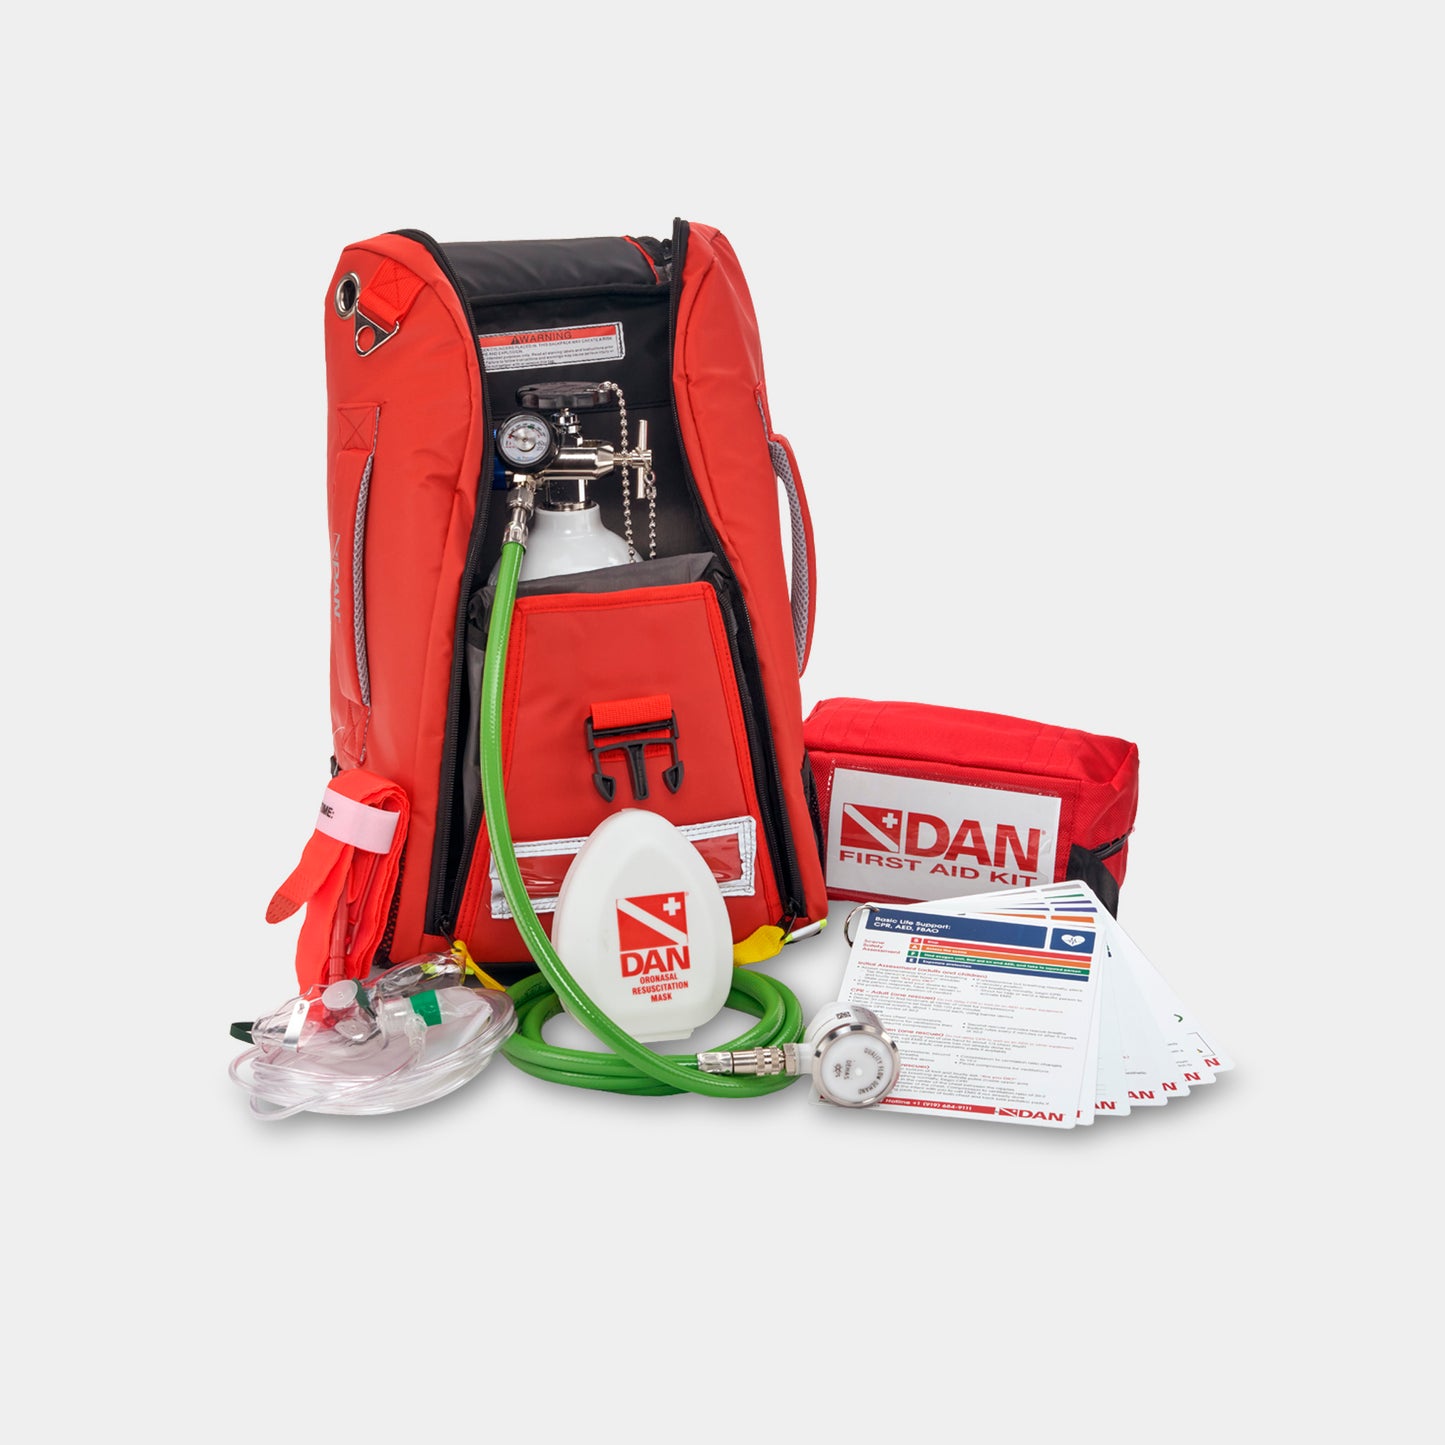 First Aid Backpack w/O2 & white shoulder